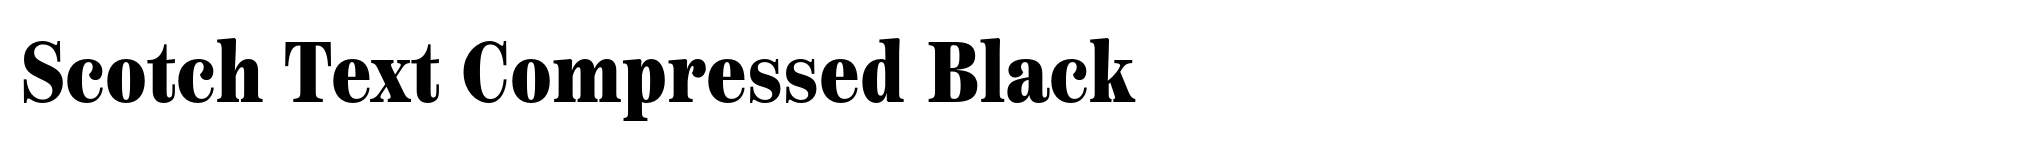 Scotch Text Compressed Black image